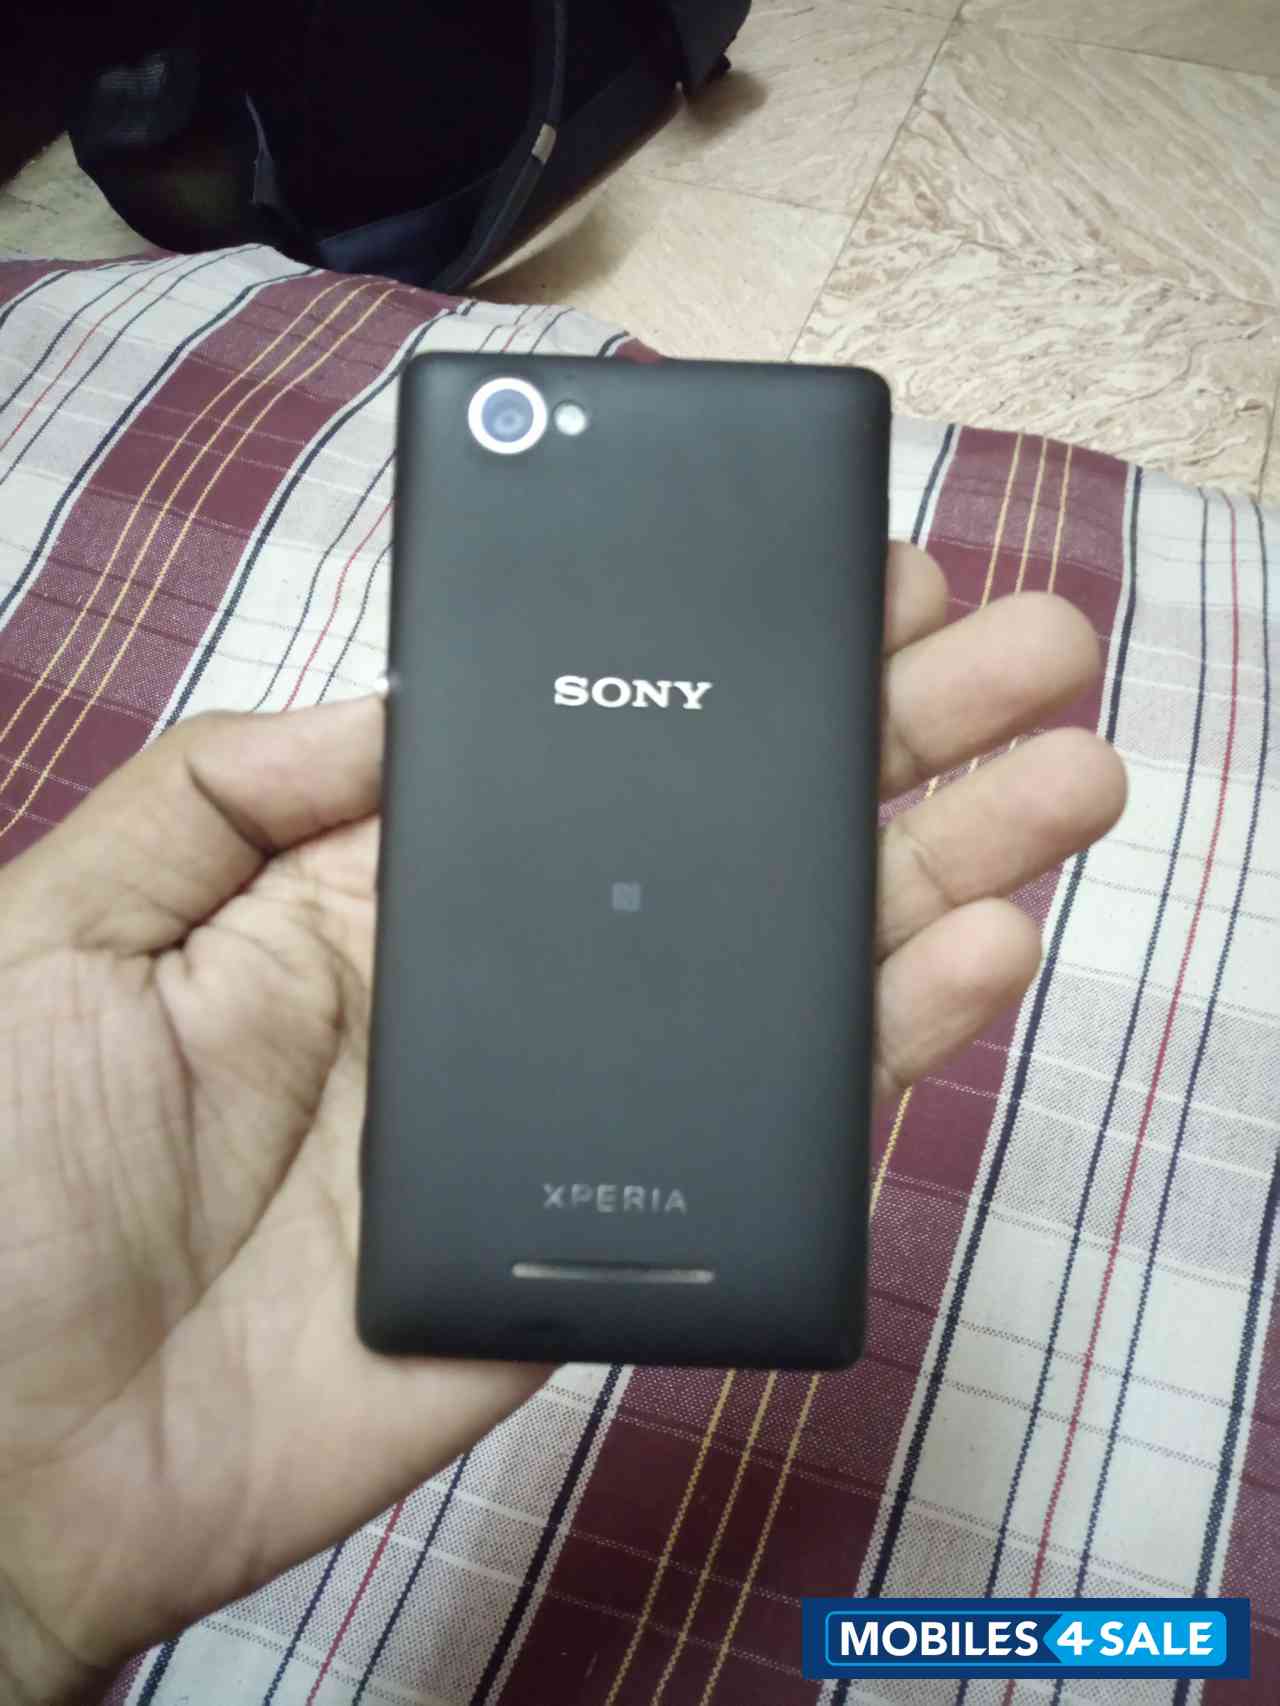 Sony  Xperia m dual